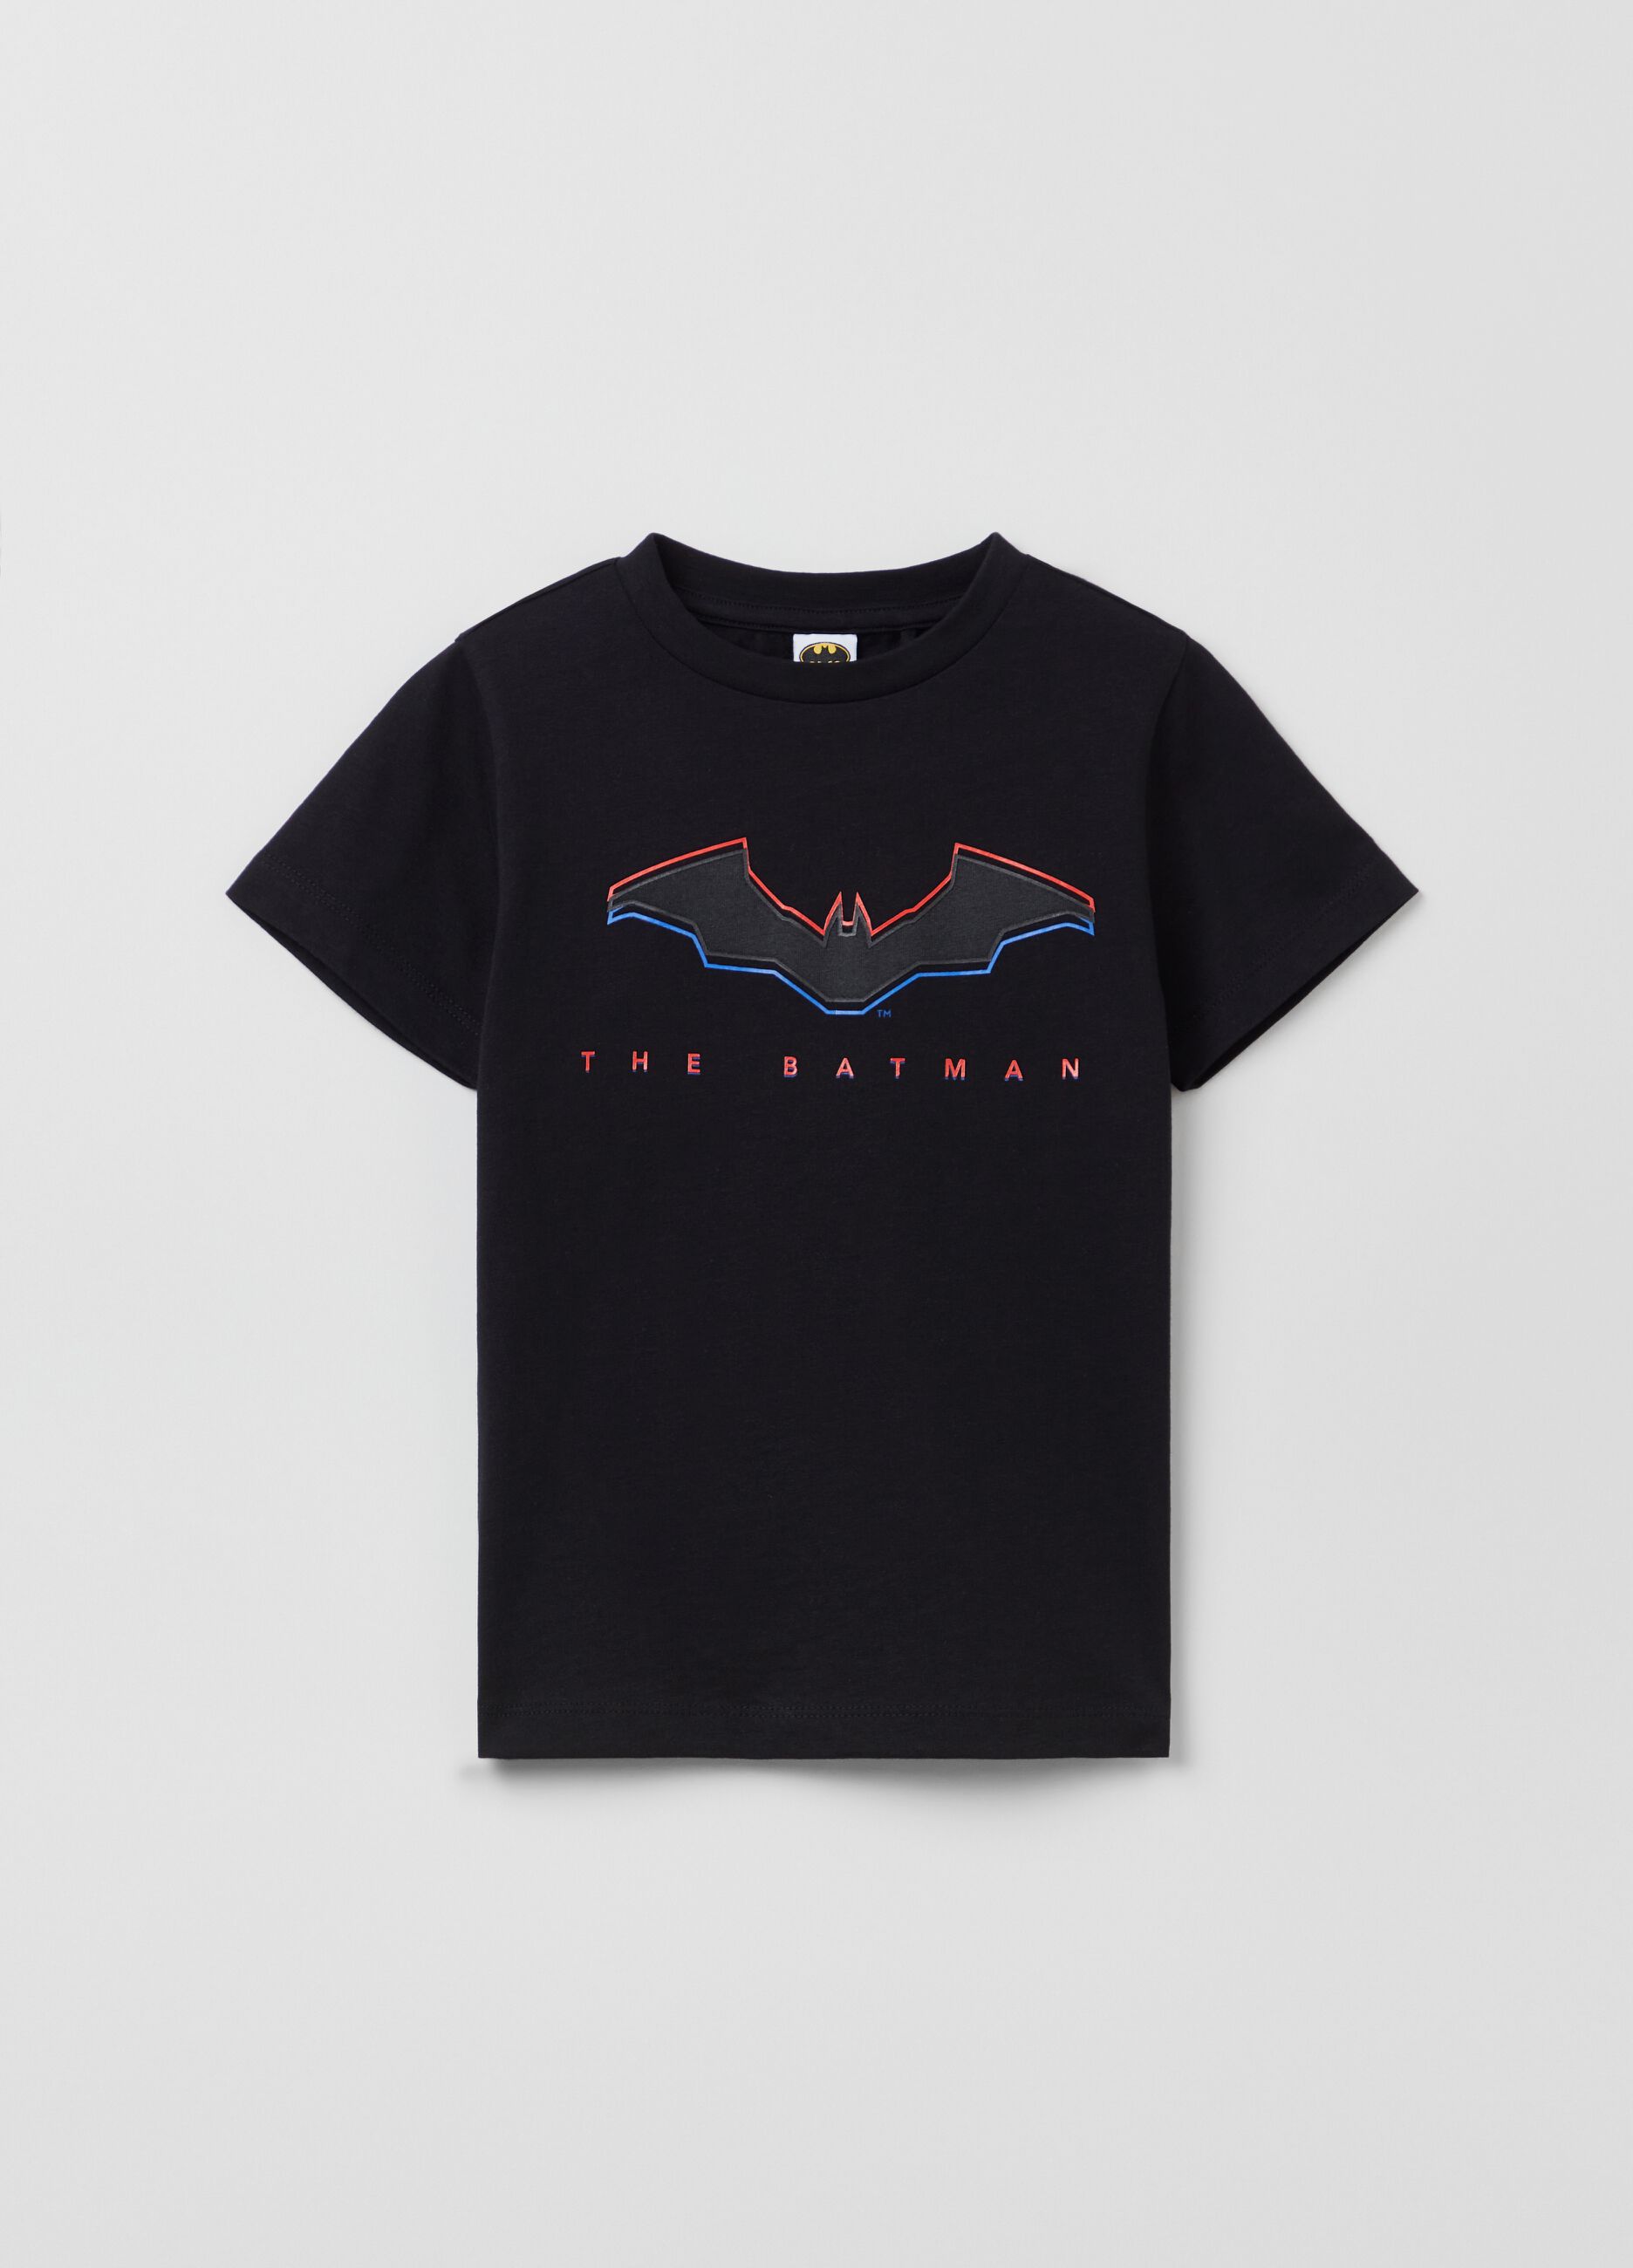 Cotton T-shirt with The Batman print